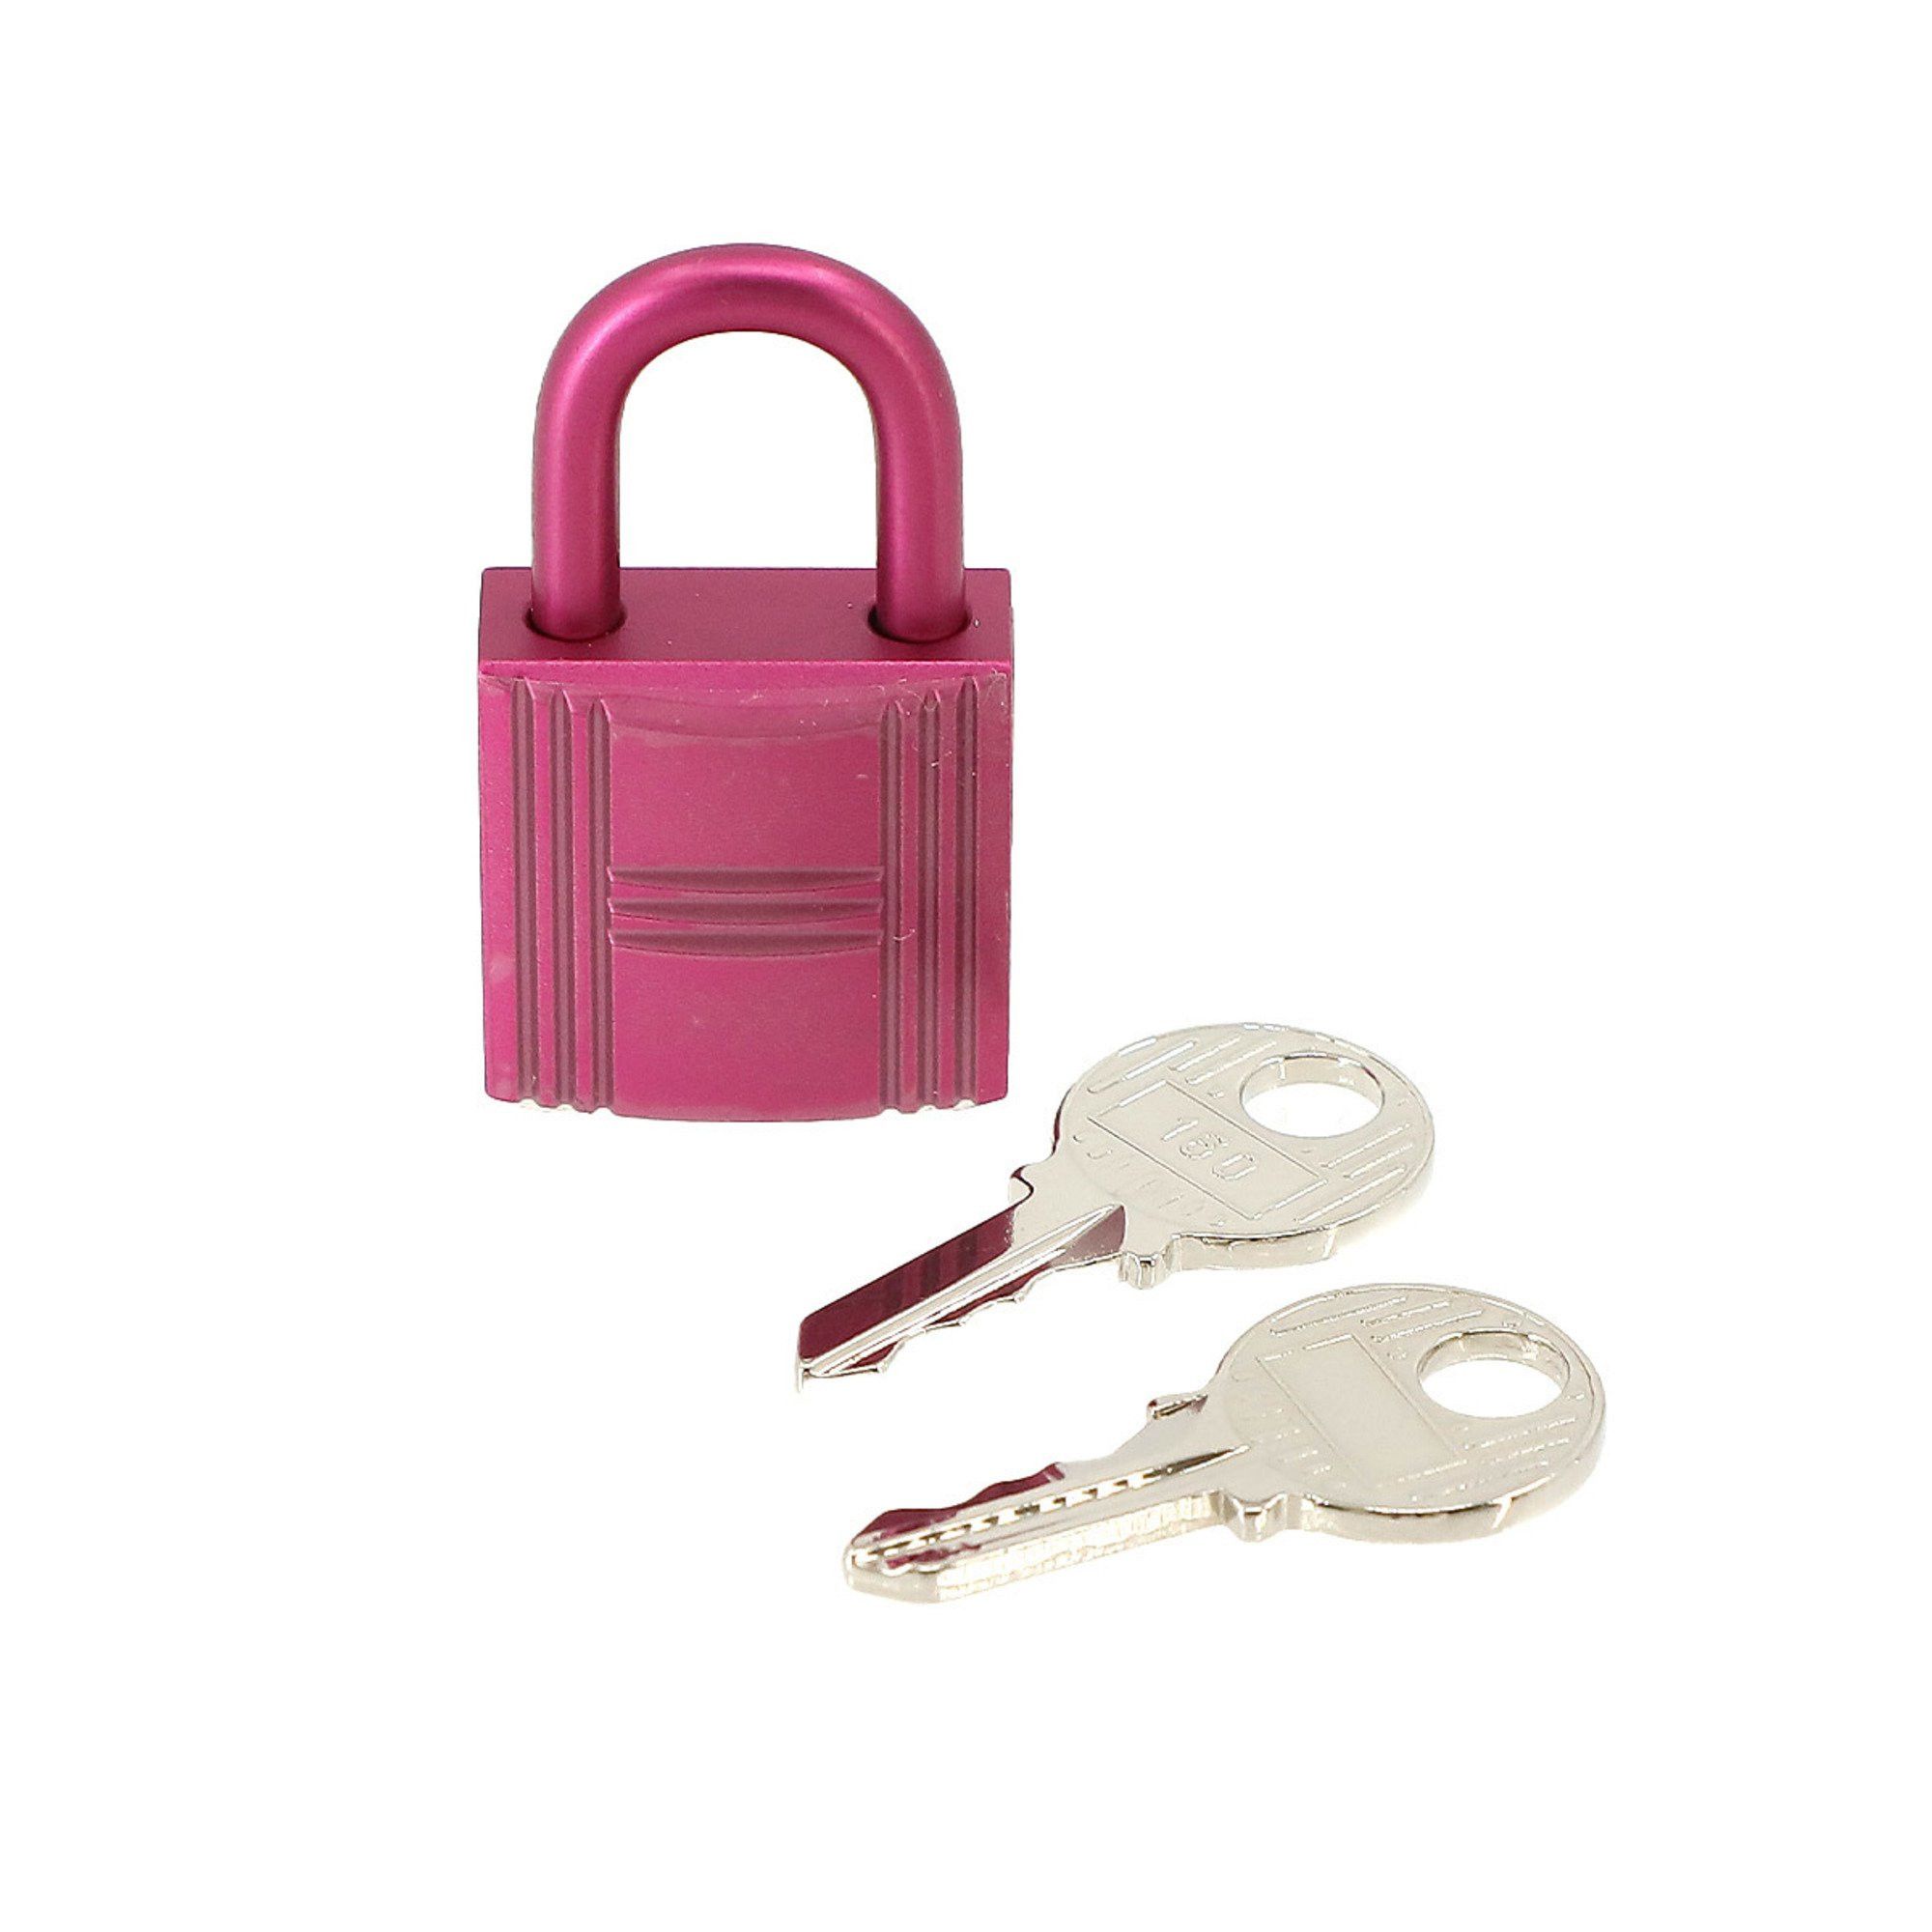 image of Hermes Cadena Key Set Padlock Monochrome Saw Pink Silver Lock, Women's